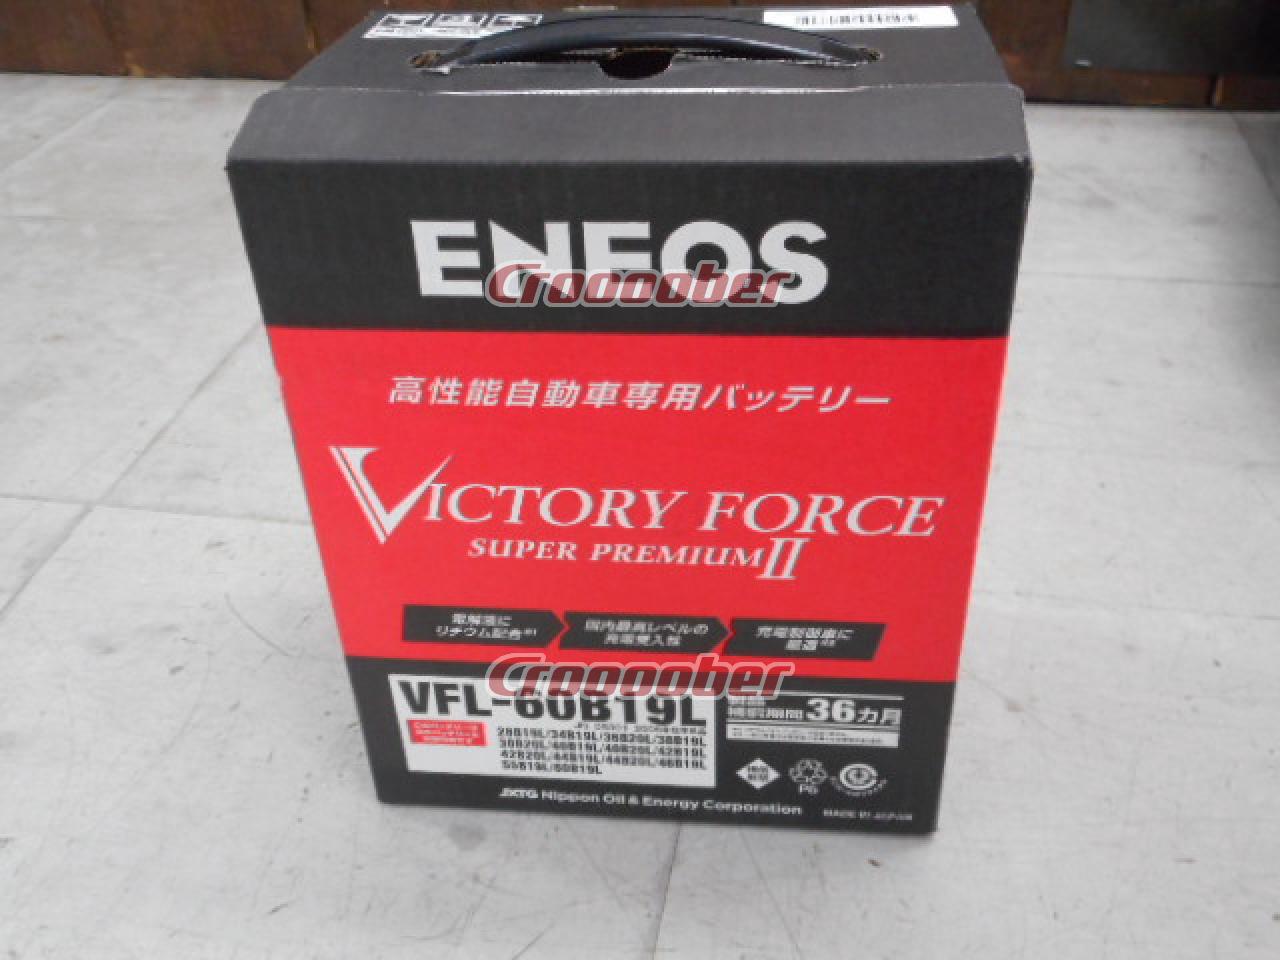 ENEOS VICTORY FORCE SUPER PREMIUM Ⅱ VFL-60B19L | Batteries 